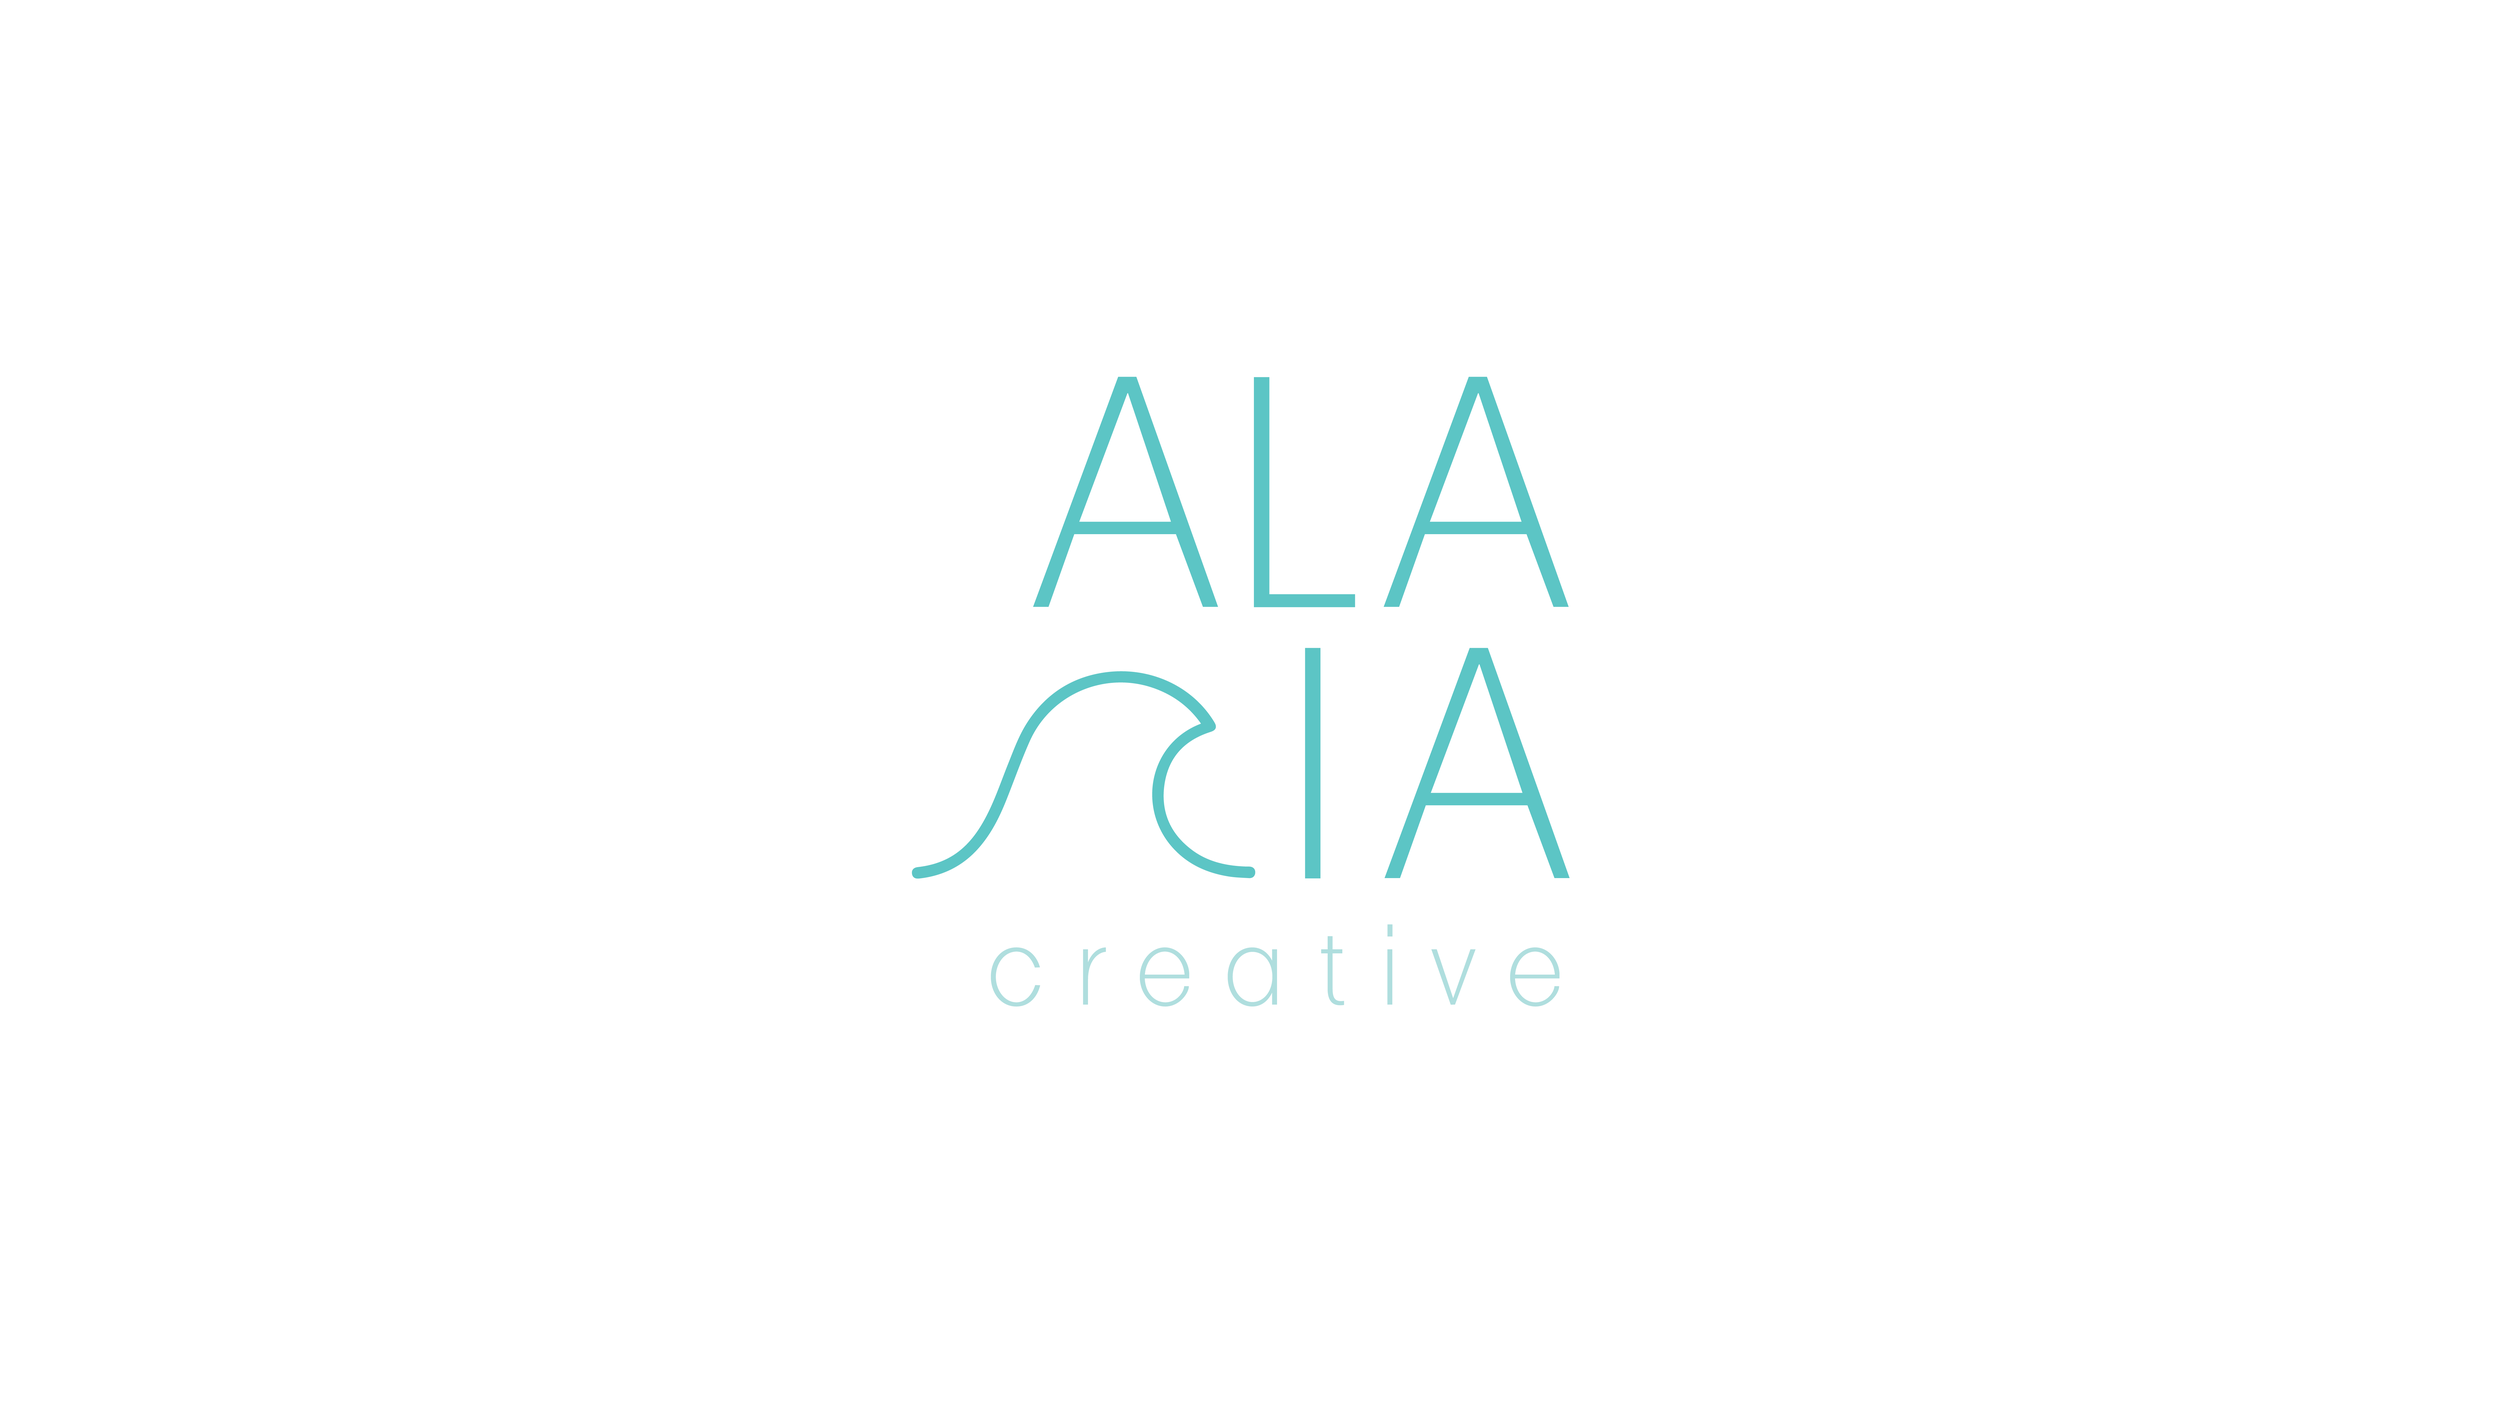 Alaia Creative Logo_Iterations-09.png